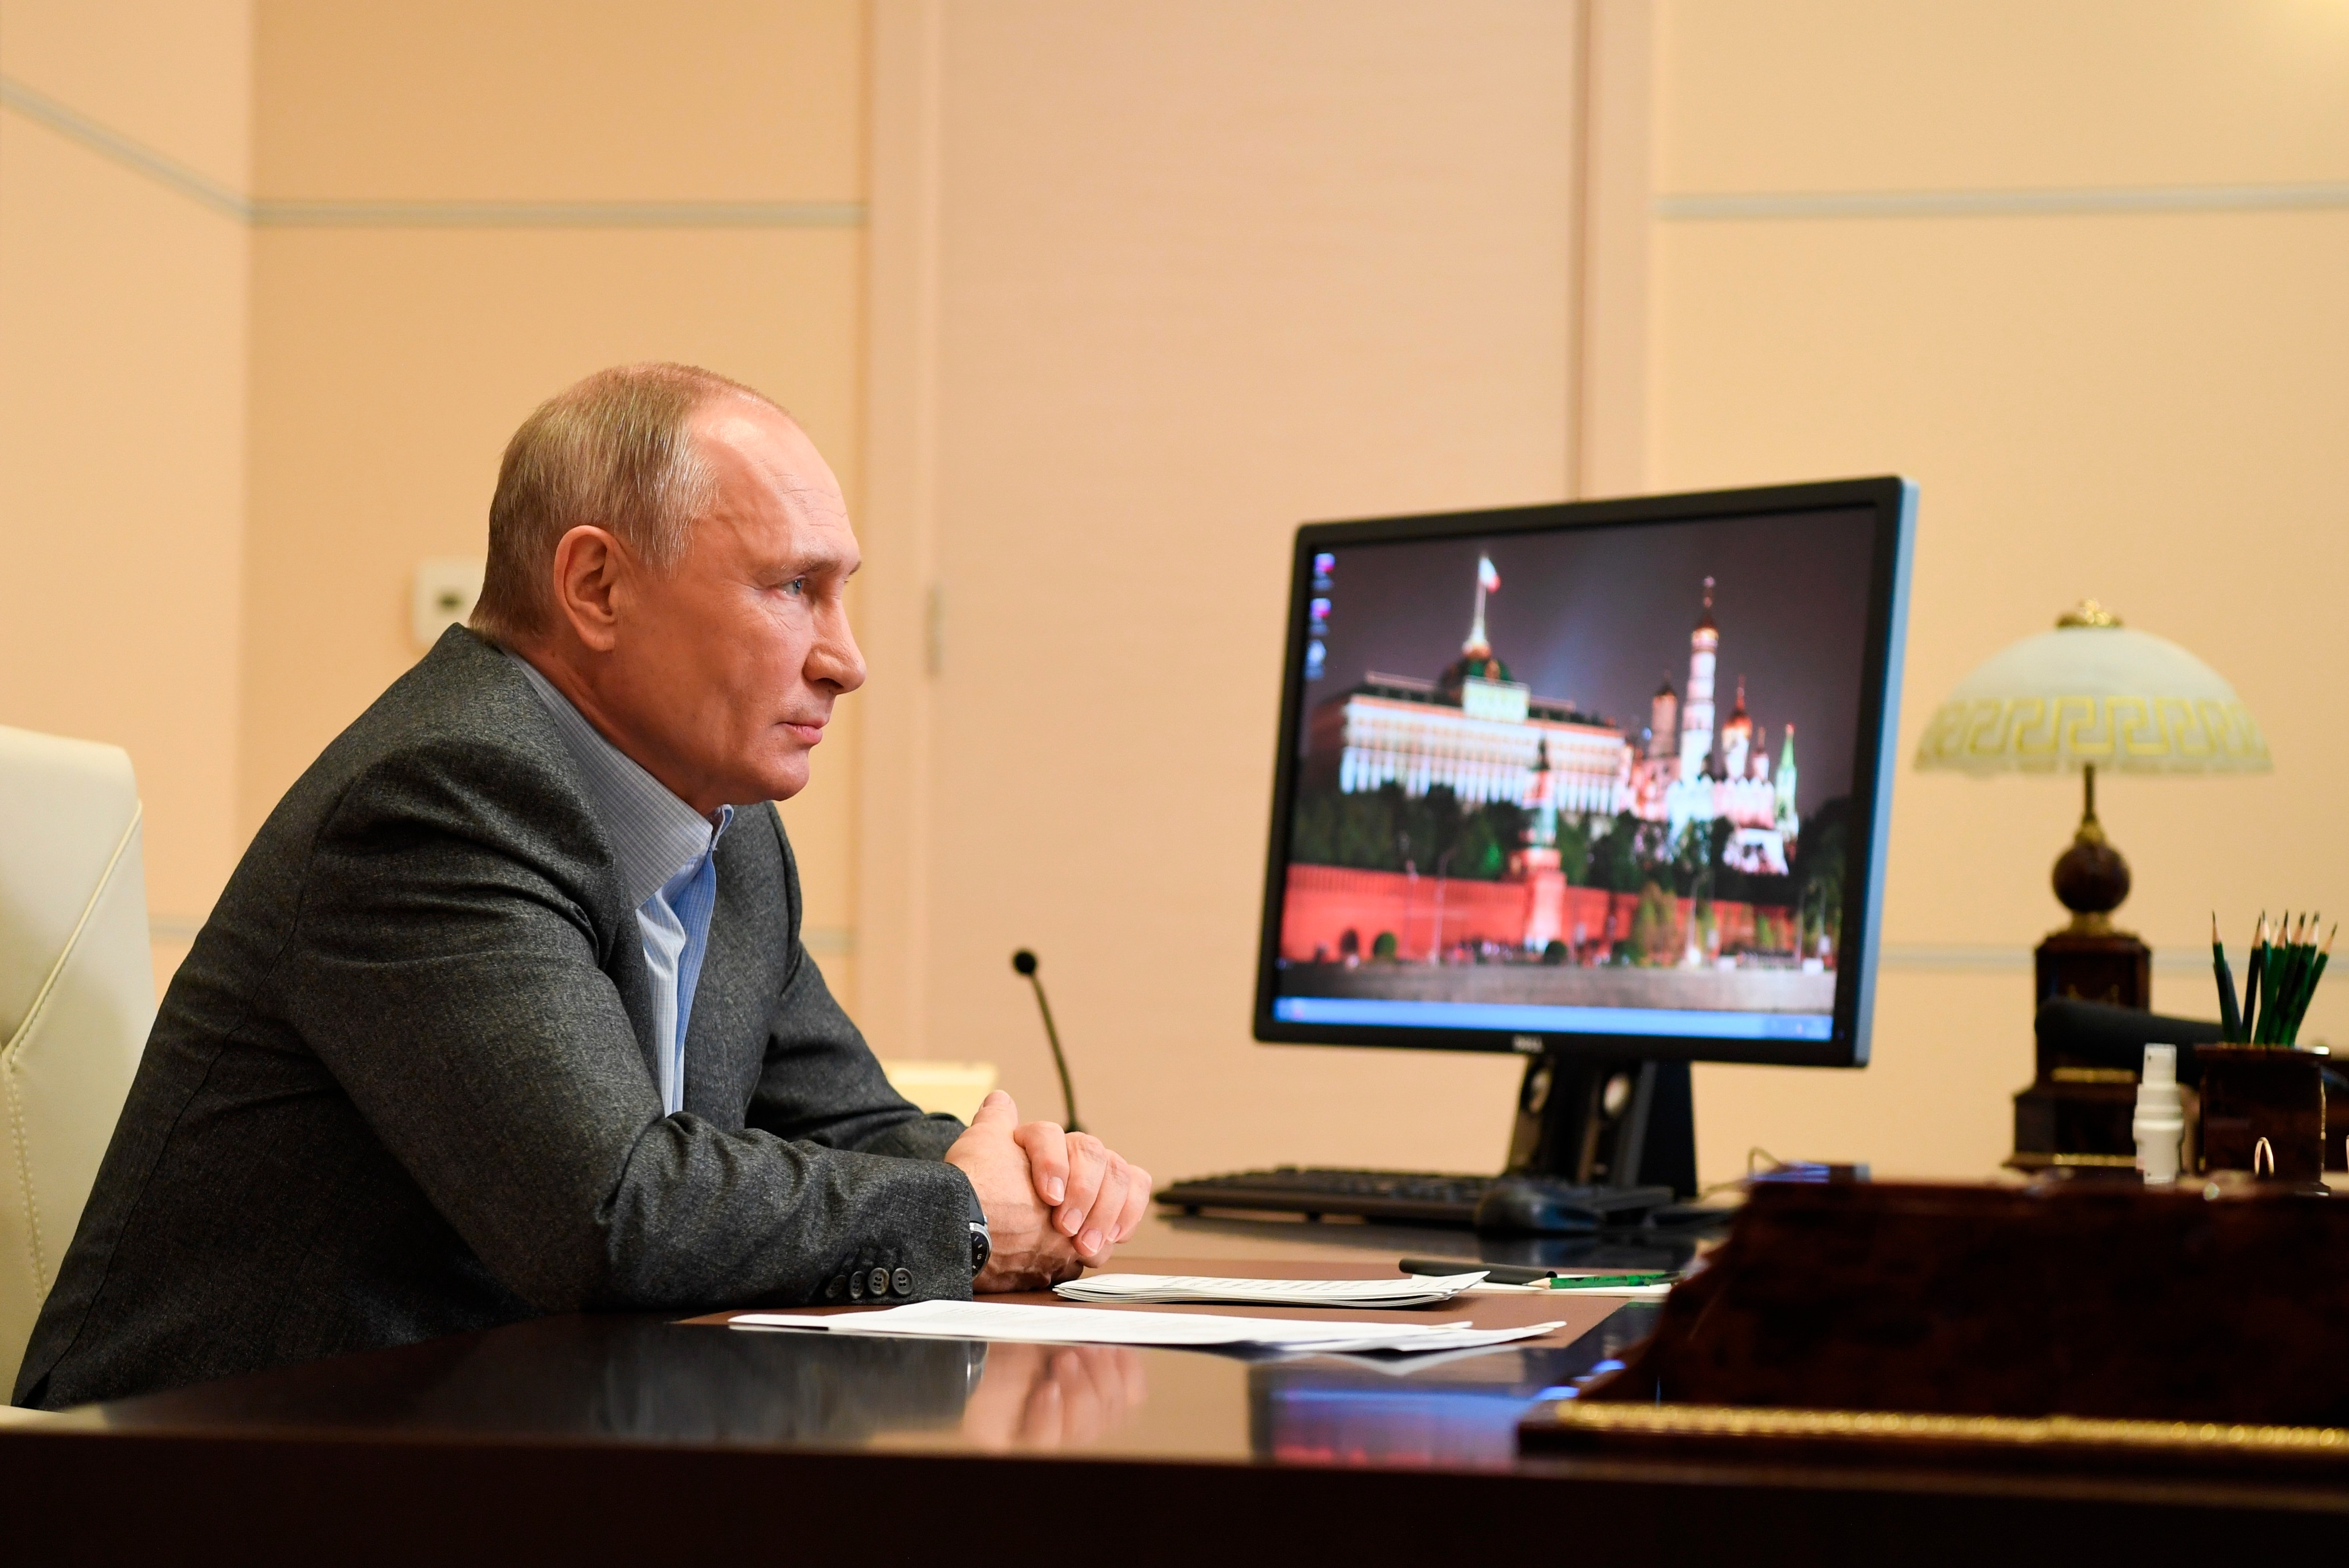 Putin challenges Biden to chat with him in a ‘live’ conversation